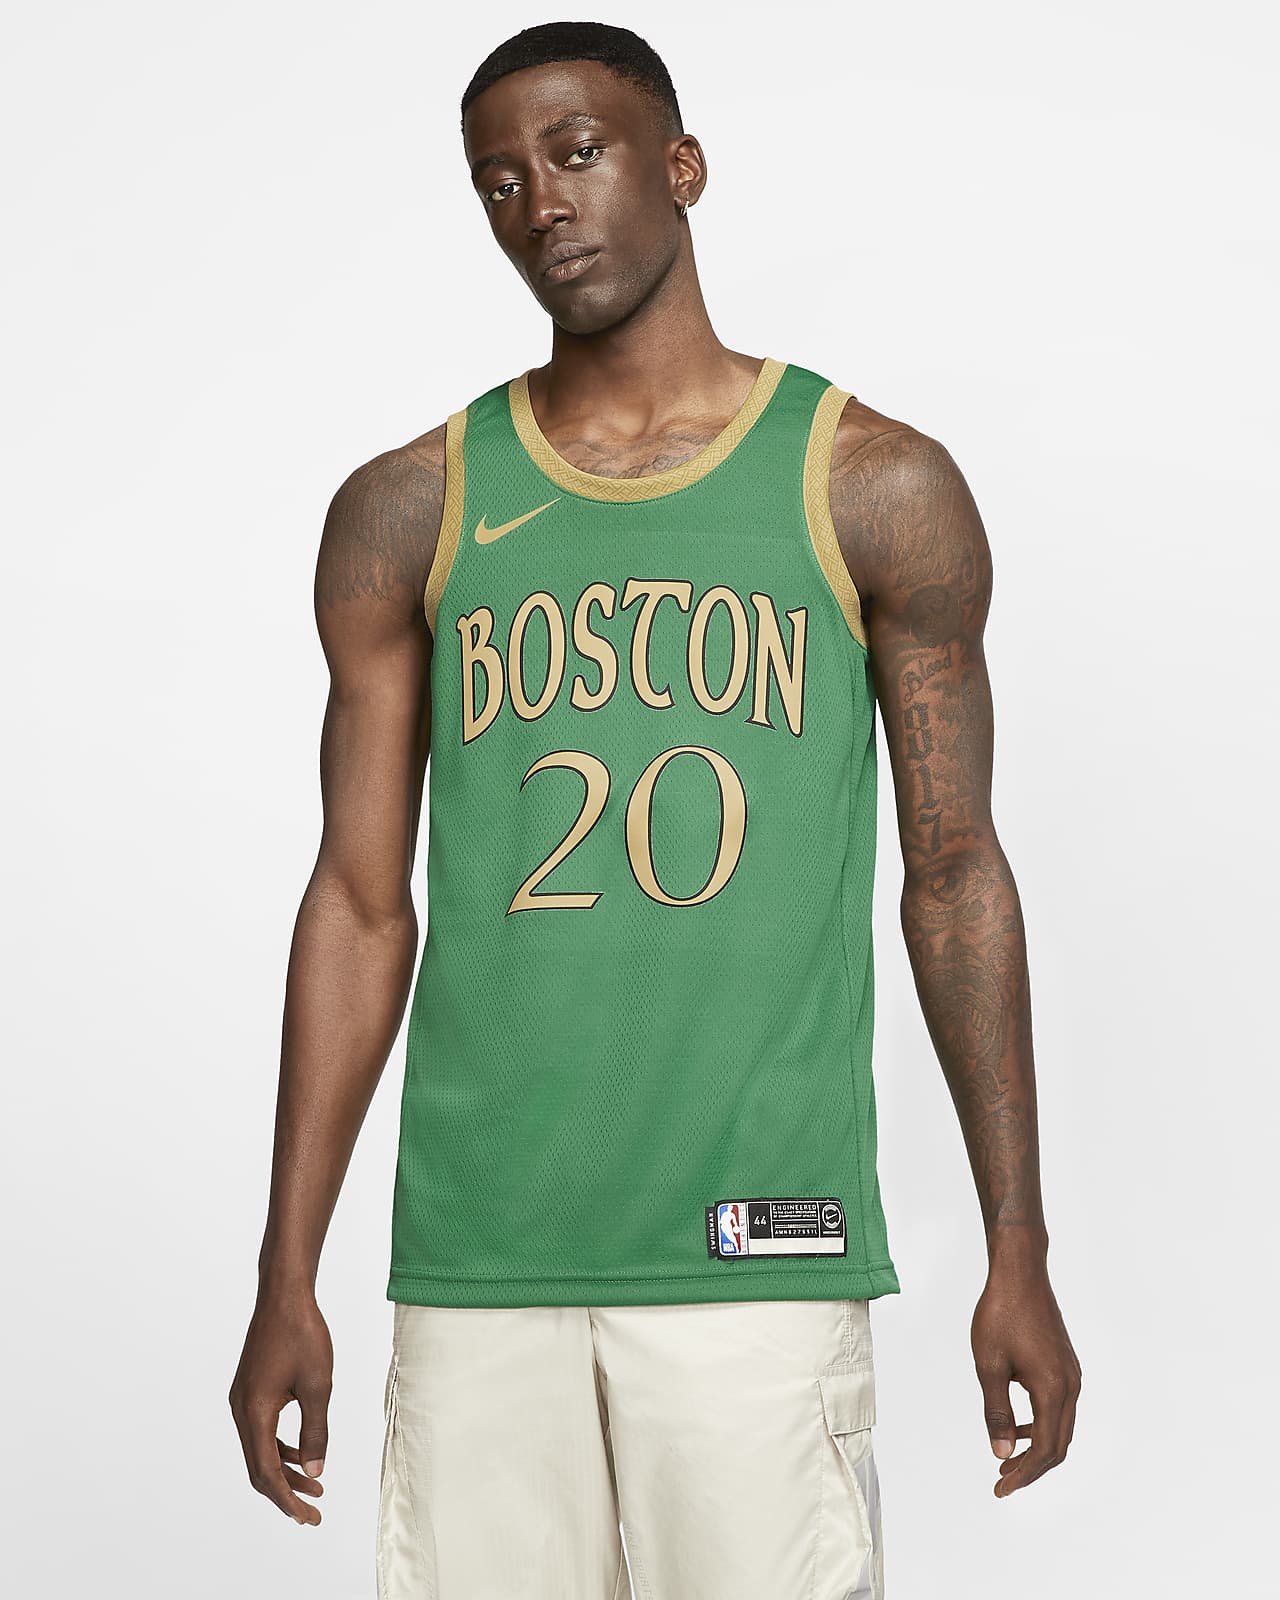 boston celtics city edition jersey